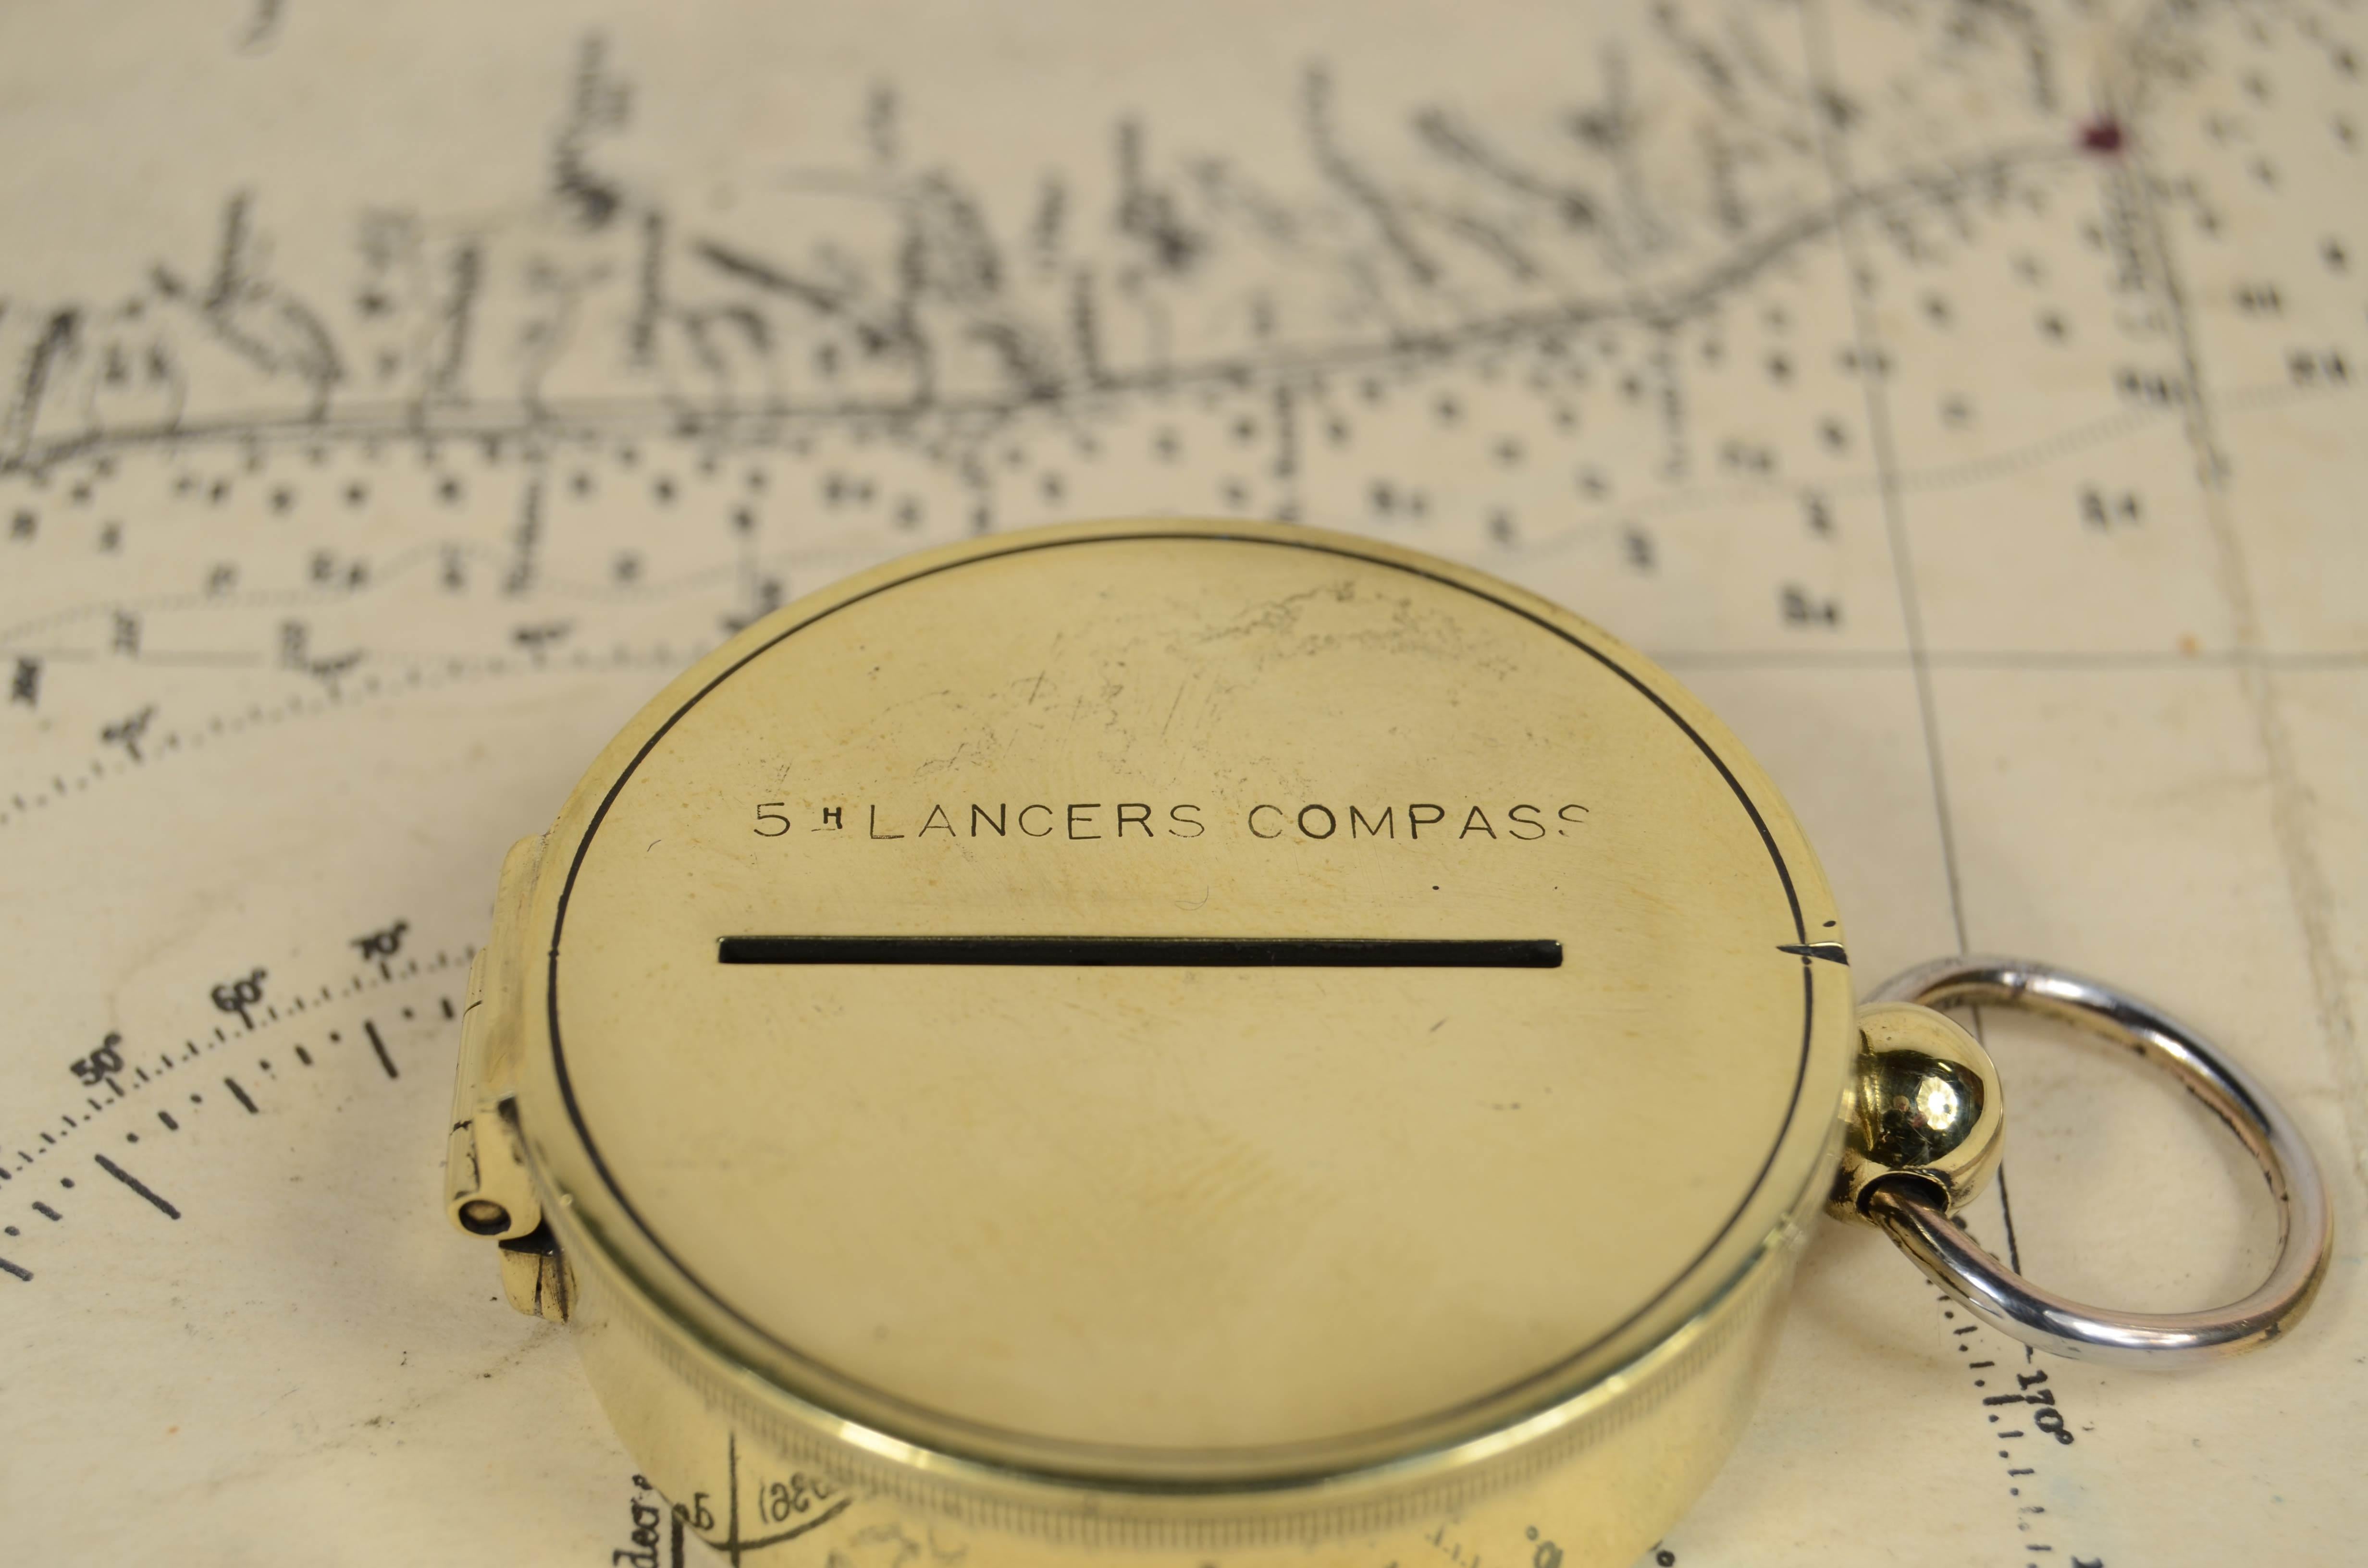 Bussola nautica da tasca in ottone, Firmata 5m LANCERS COMPASS. Inghilterra 1920 im Angebot 4